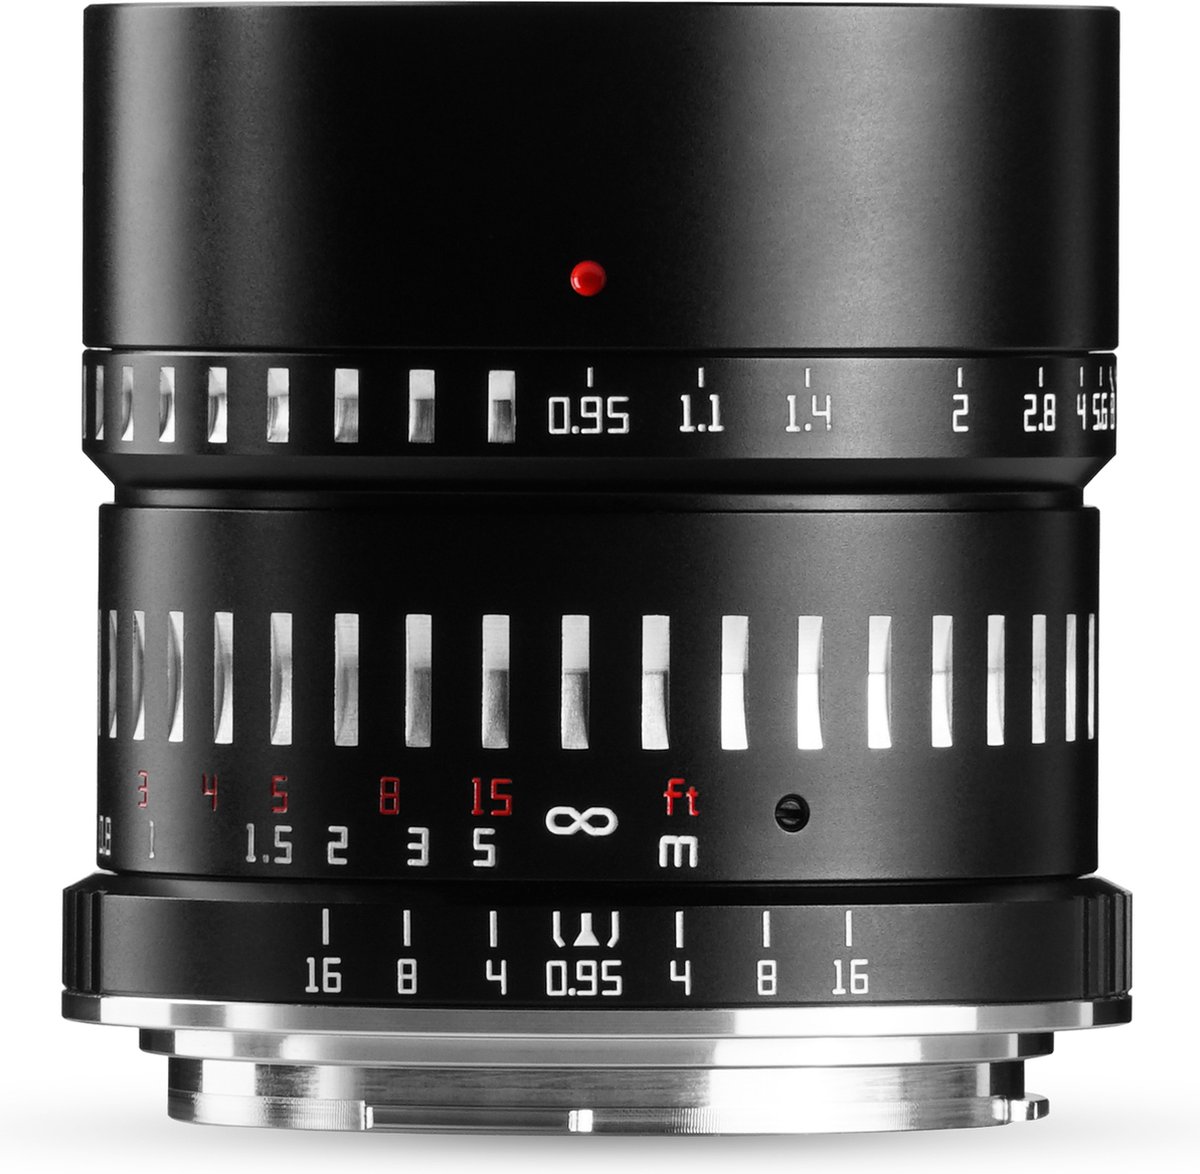 TT Artisan - Cameralens - 50mm F0.95 for M43, black + silver